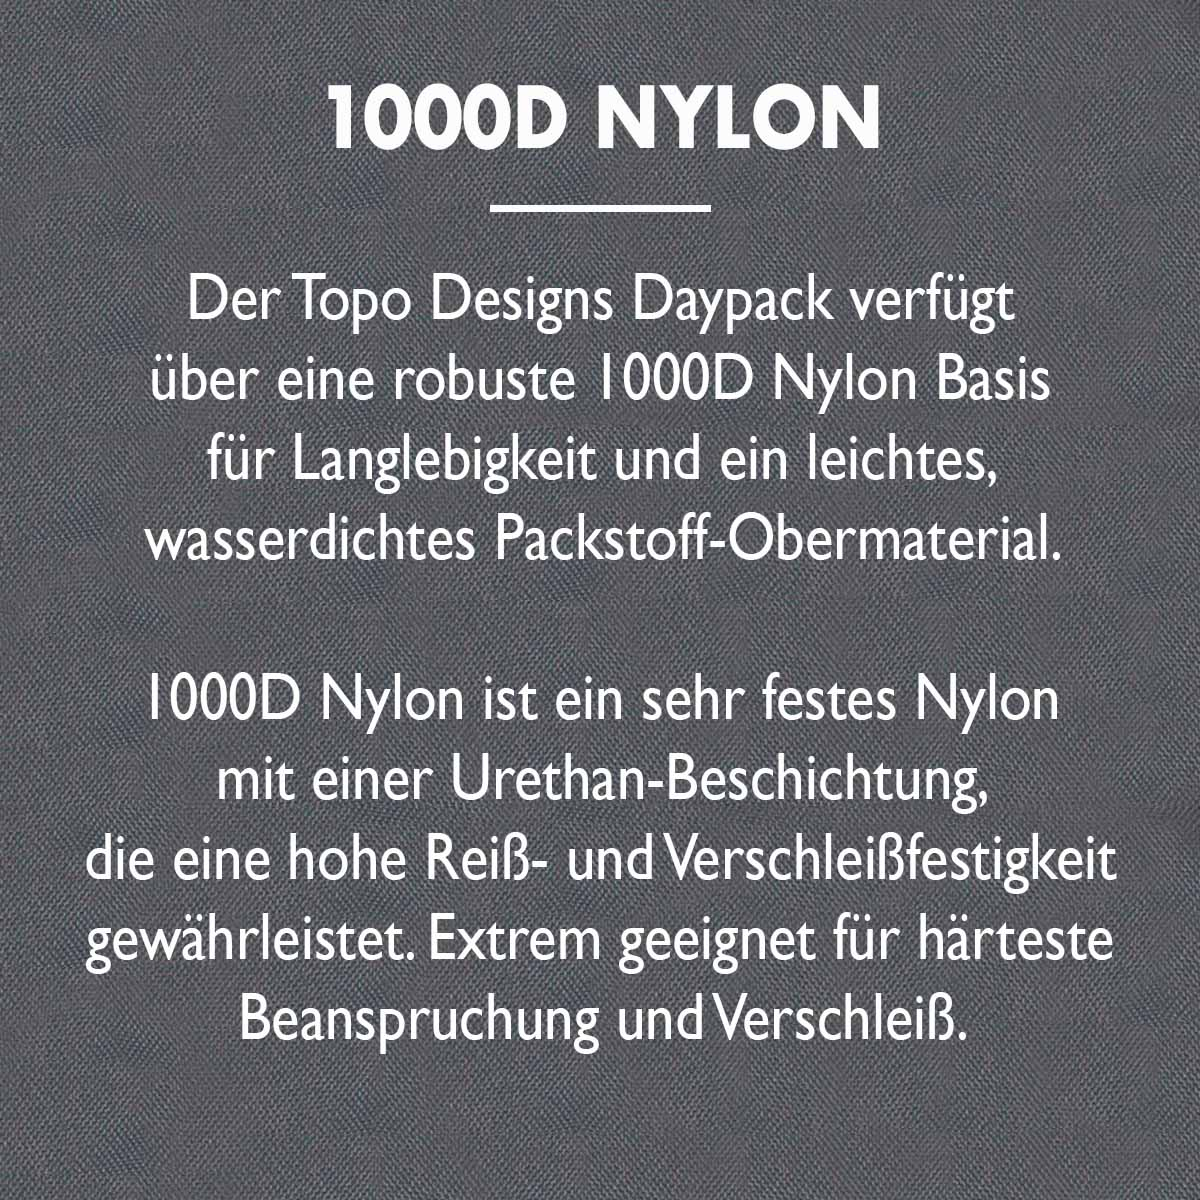 Topo Designs Daypack Classic Charcoal, 1000D Nylon